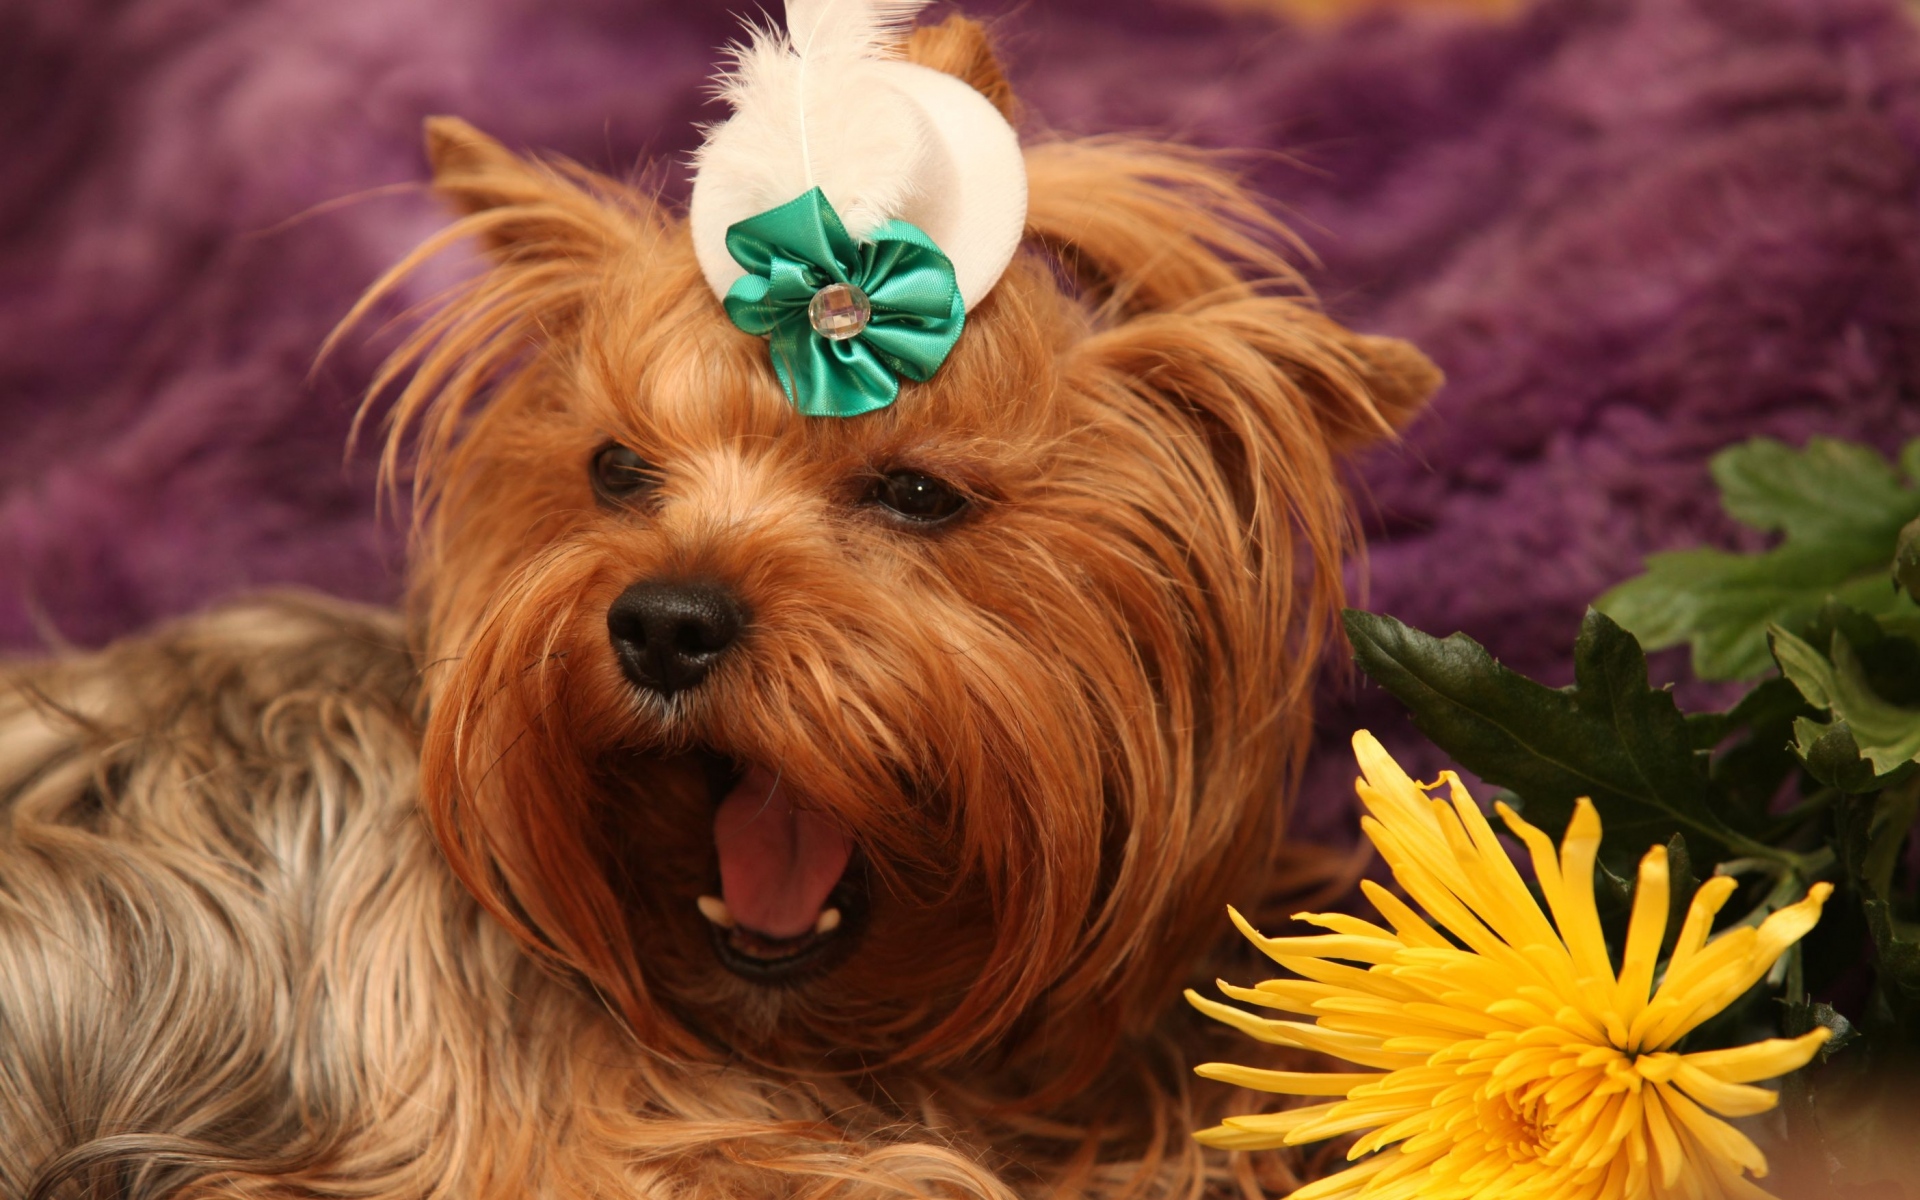 Картинки Собака, йоркширский терьер, лицо, цветок, зевая фото и обои на рабочий стол